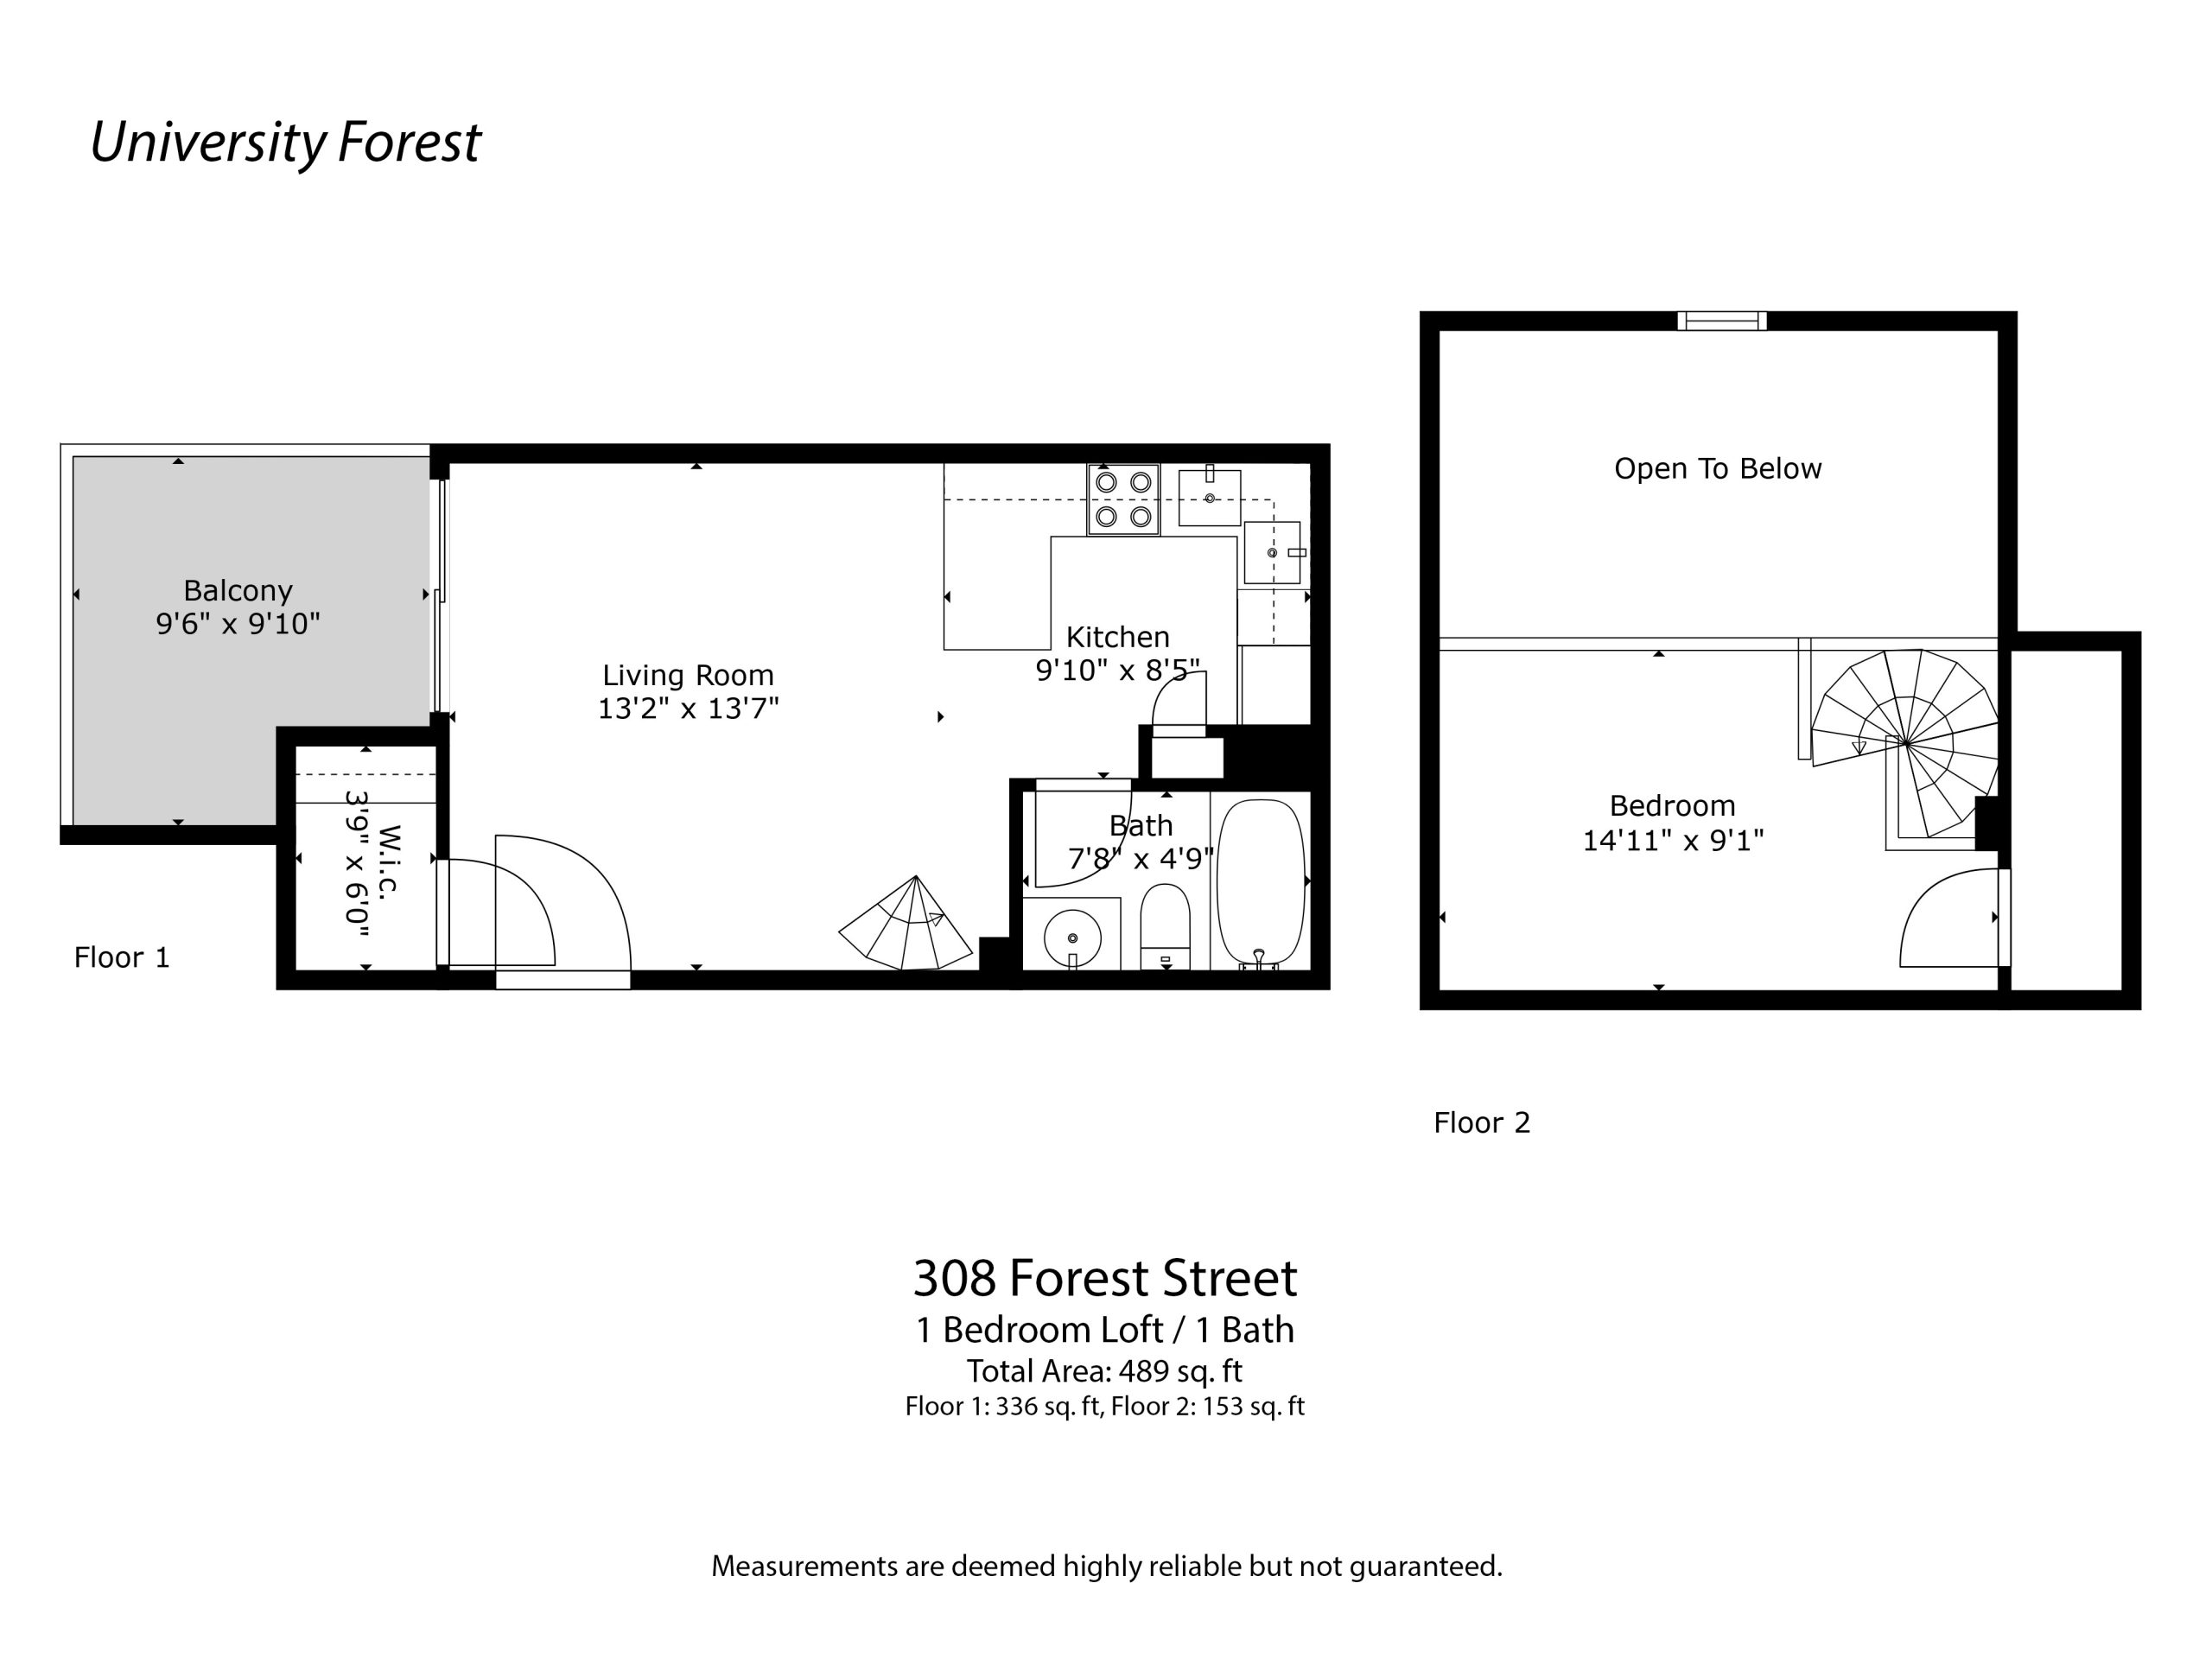 University Forest 1 Bedroom + Loft floor plans